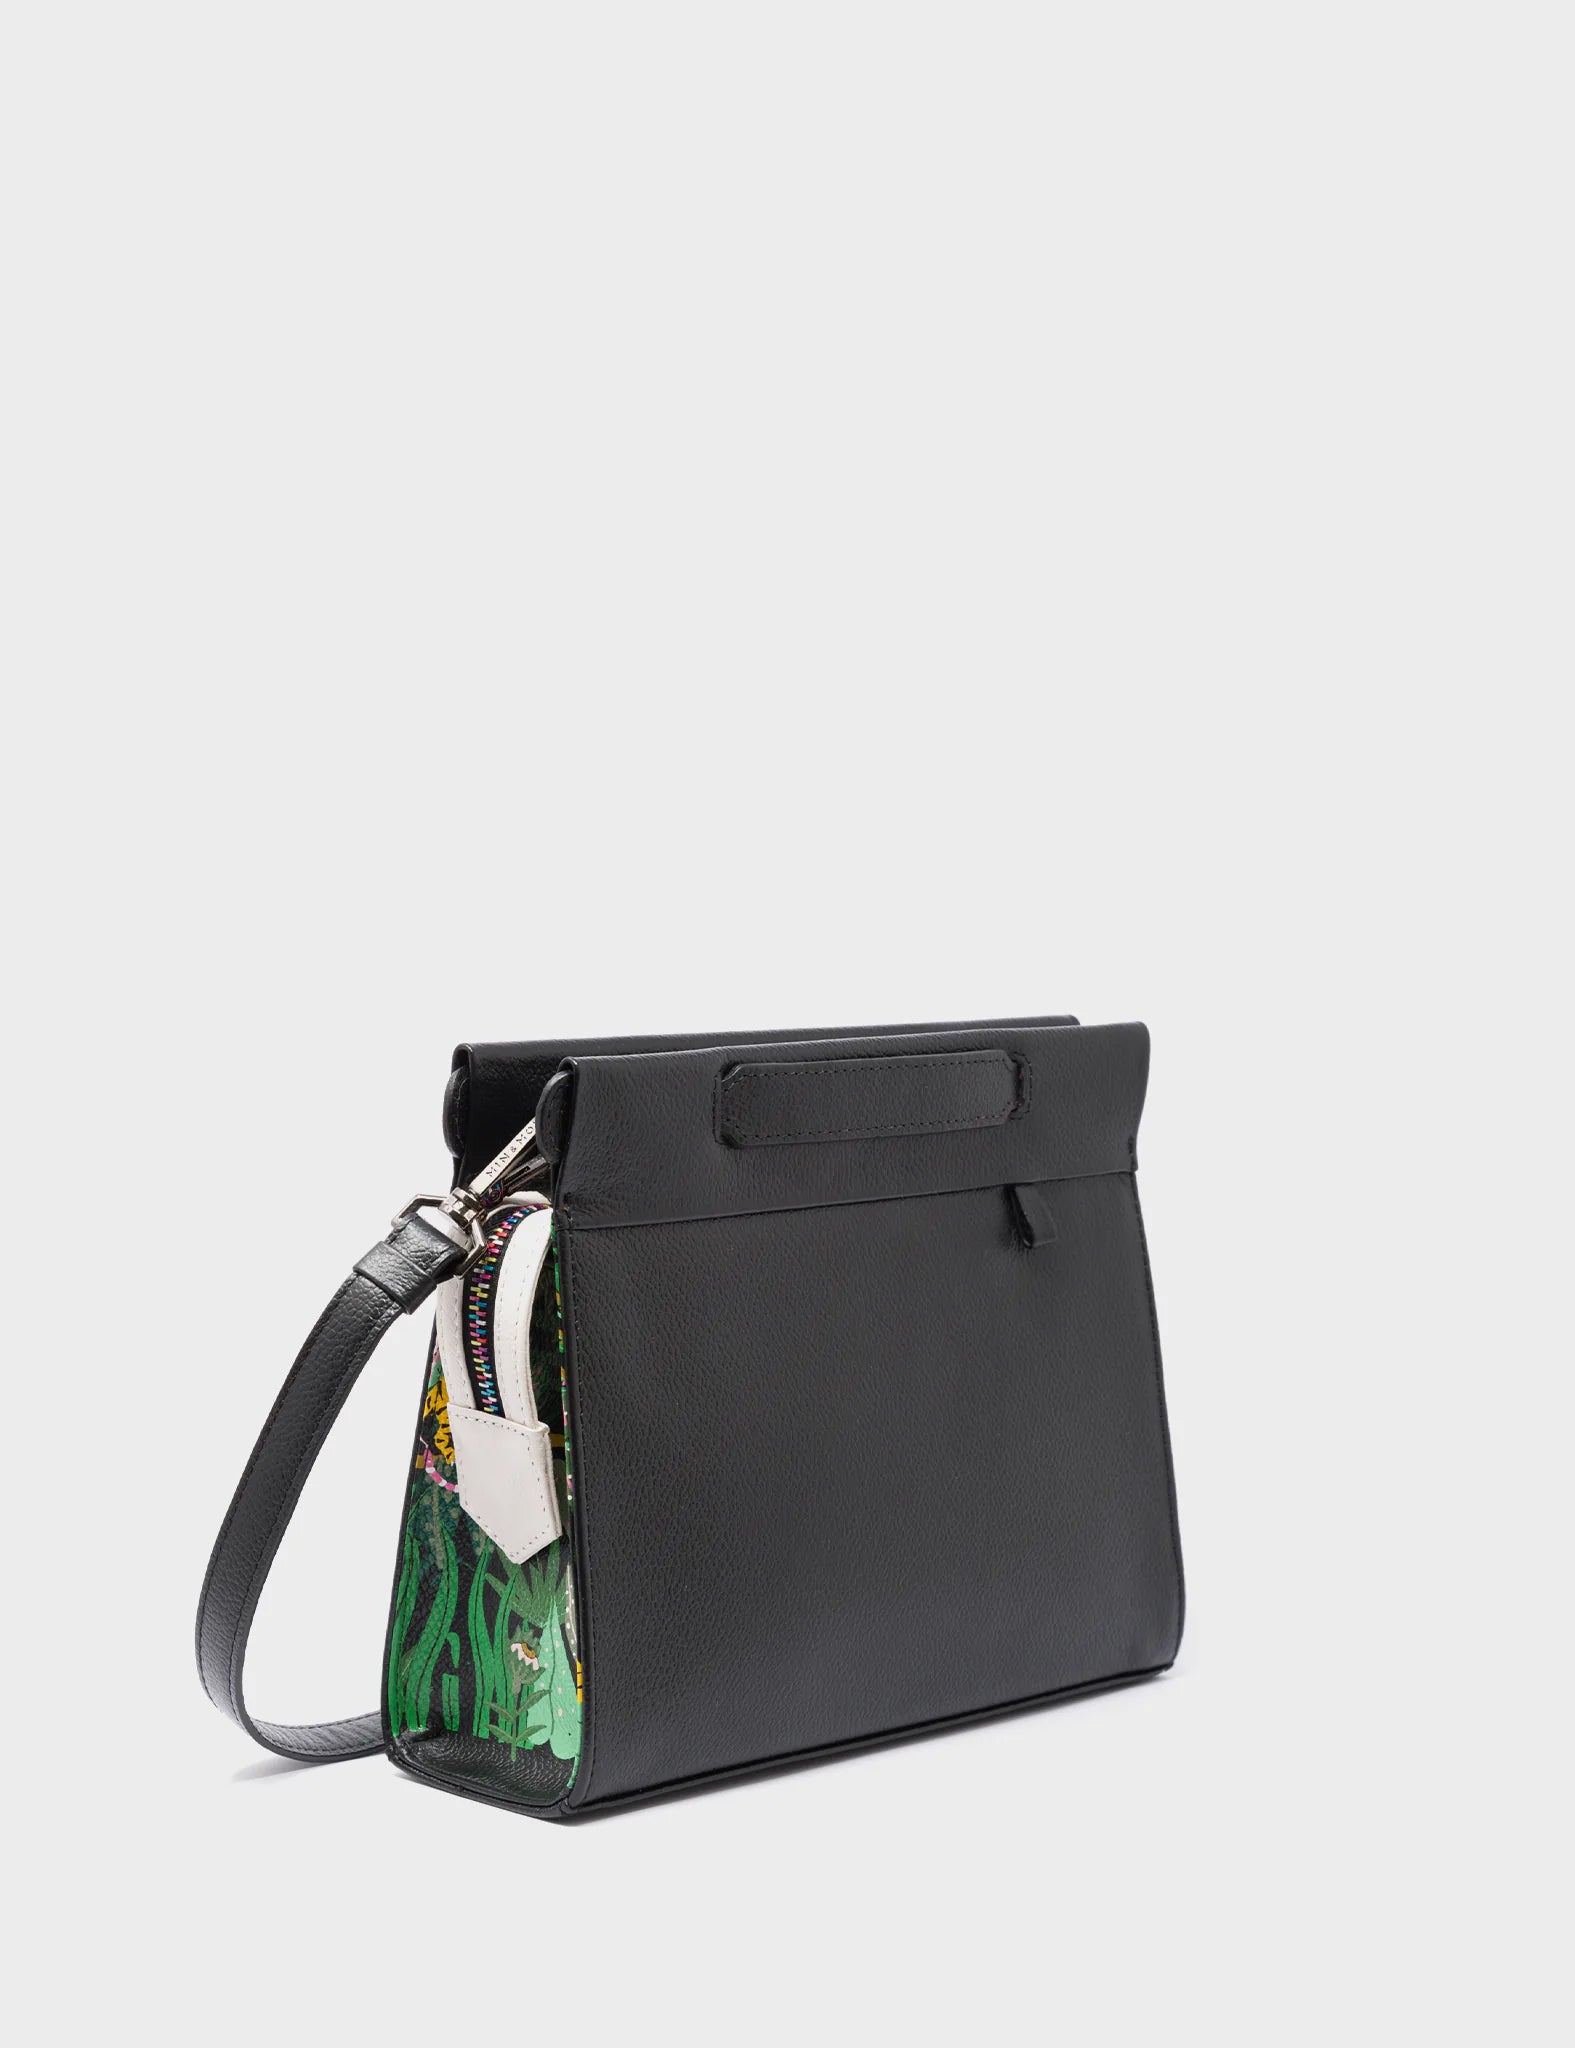 Vali Crossbody Small Black Leather Bag - El Tropico Print Design